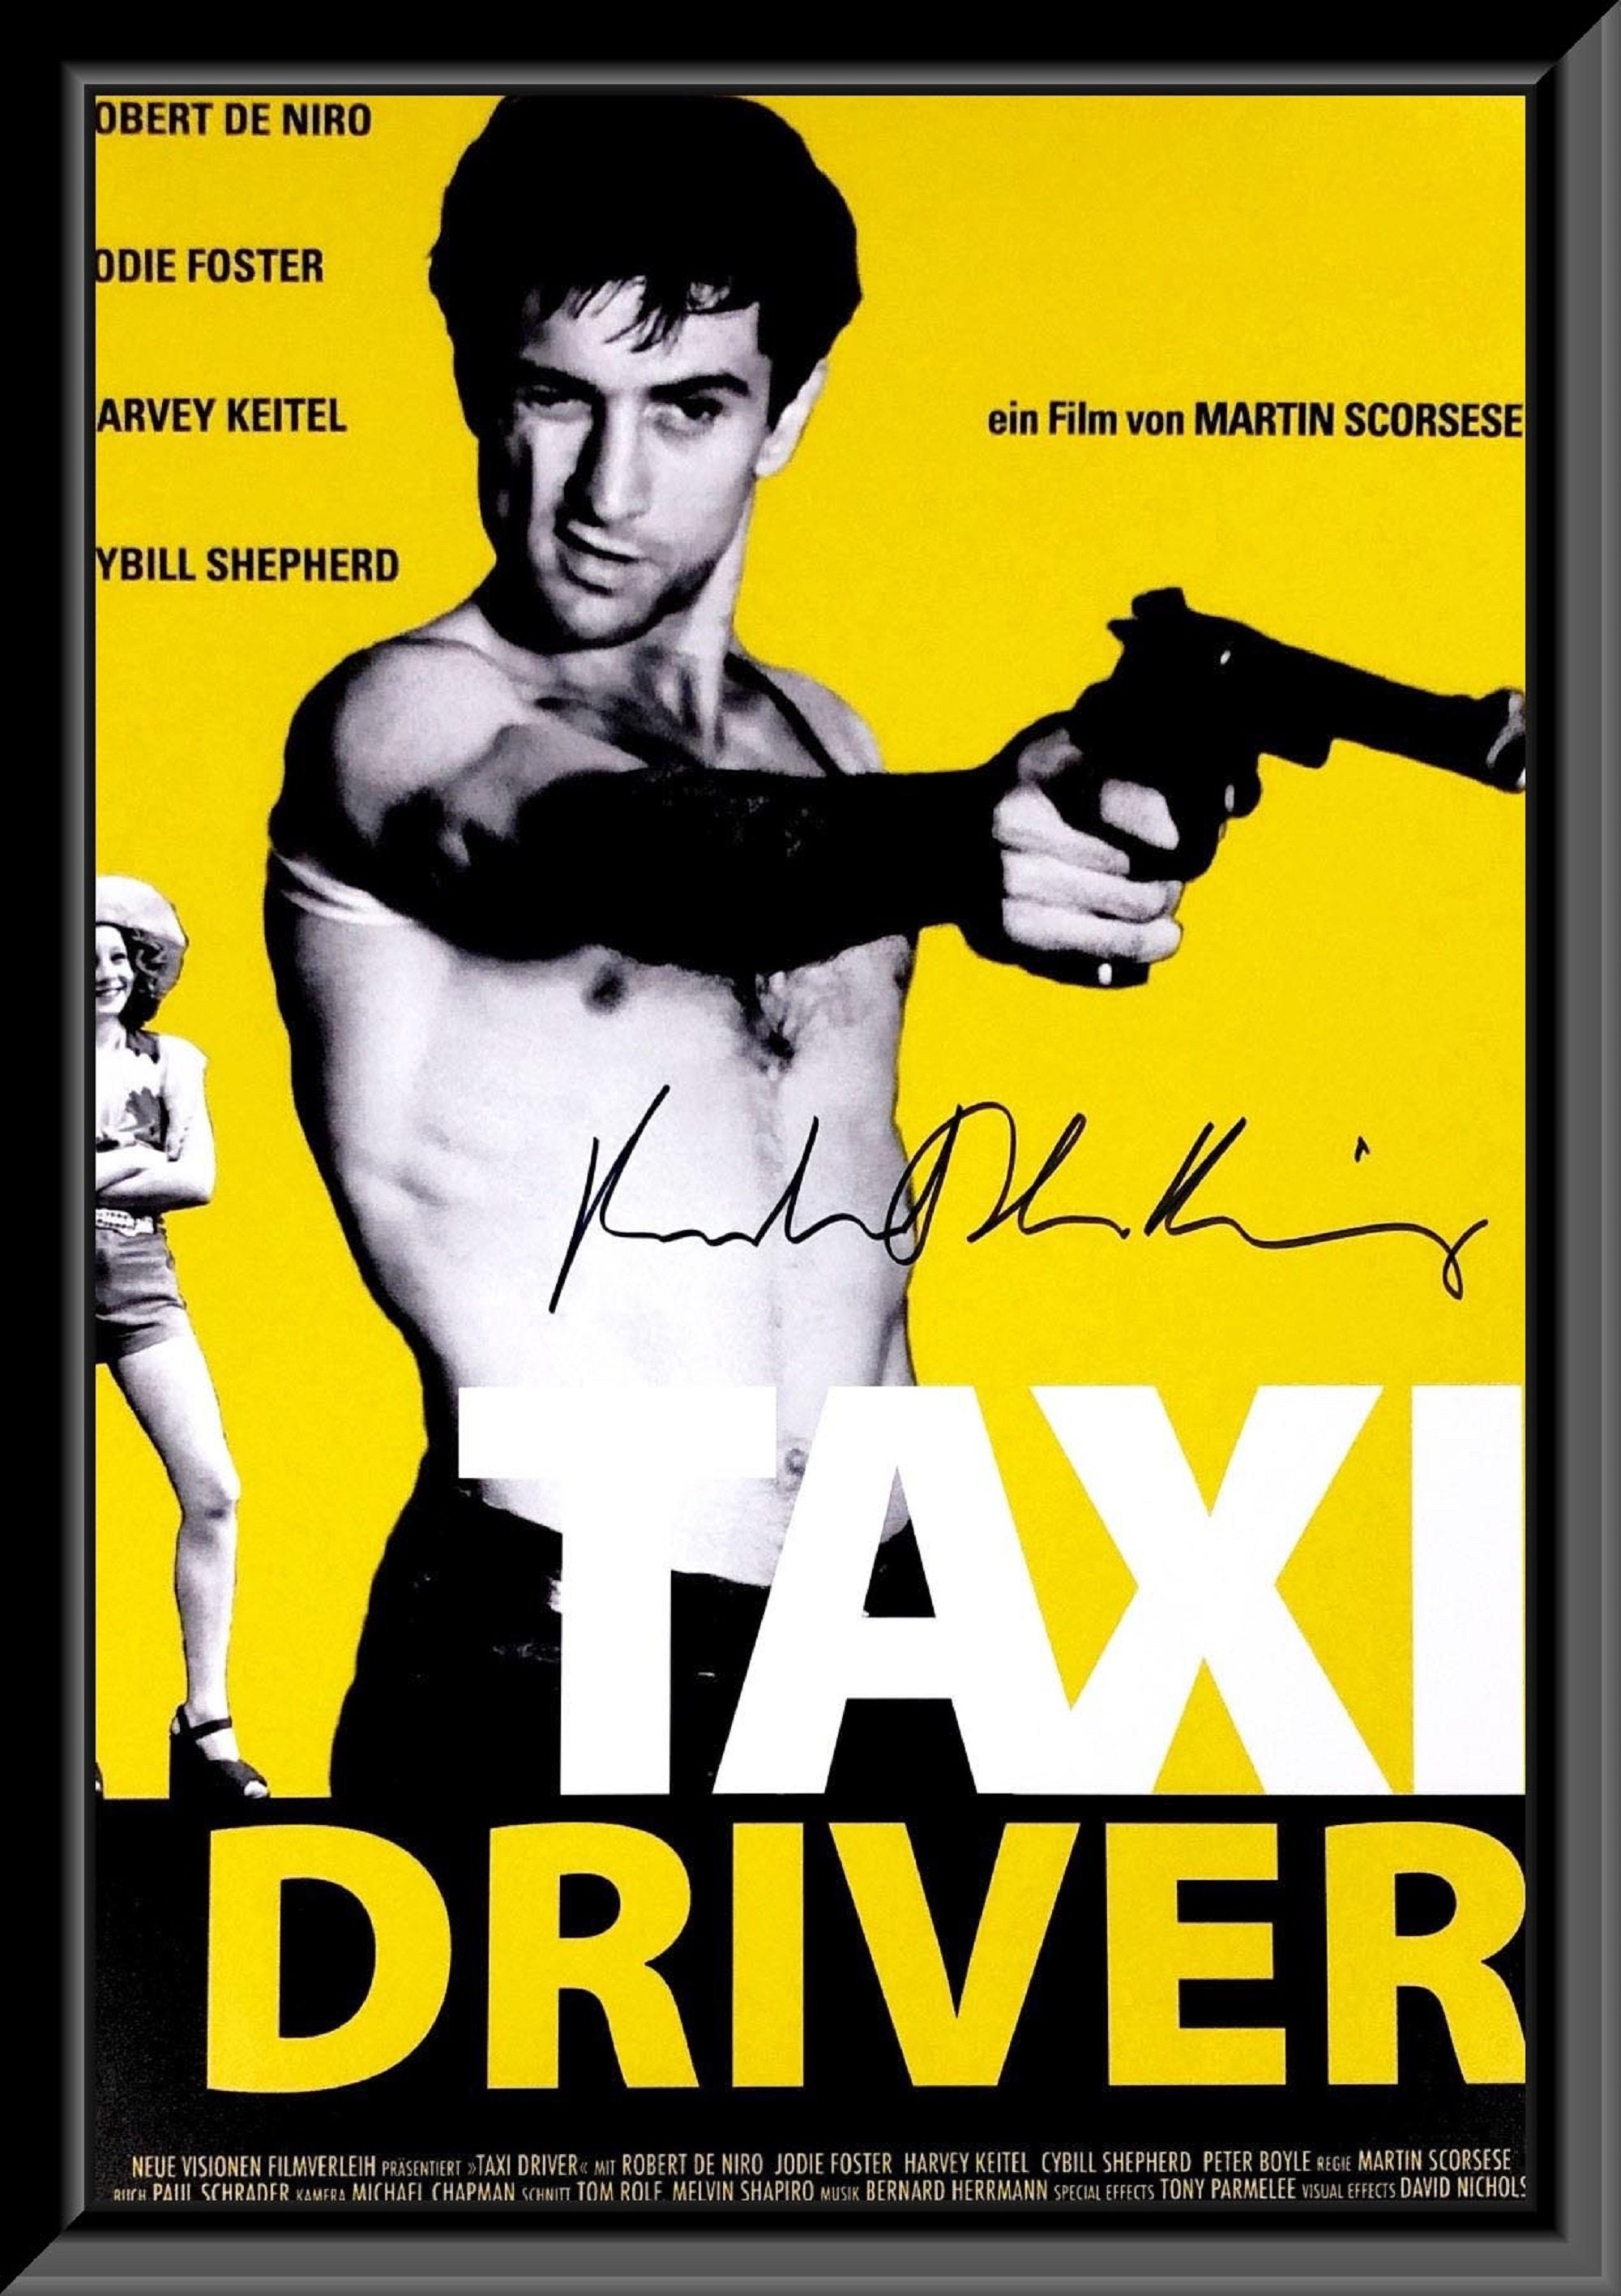 Taxi Driver Robert De Niro Signed Movie Poster pic